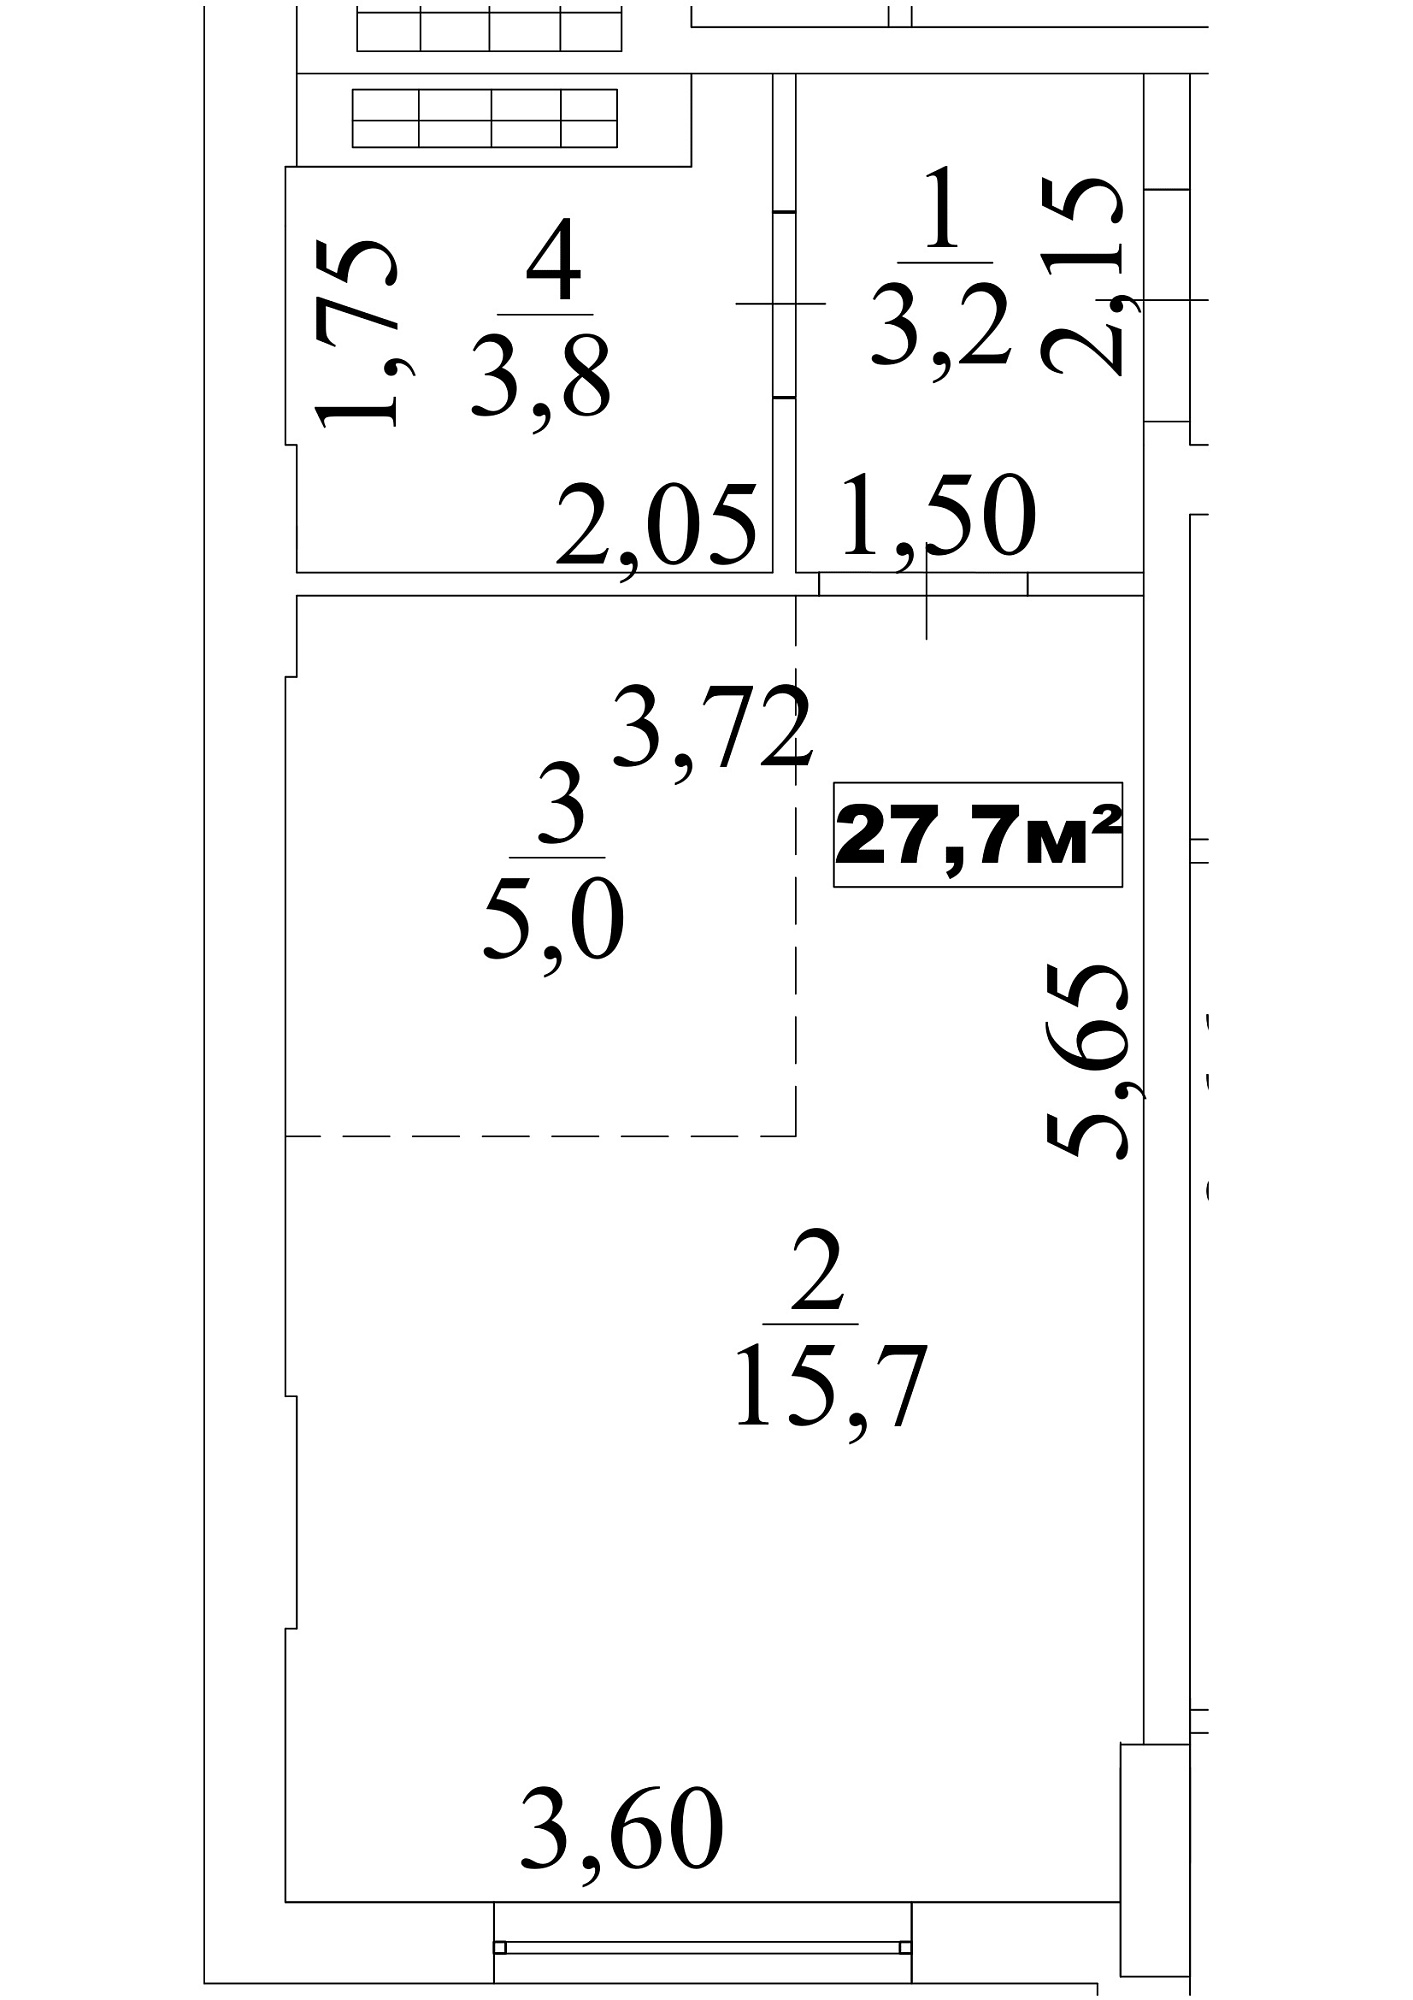 Planning Smart flats area 27.7m2, AB-10-01/0003а.